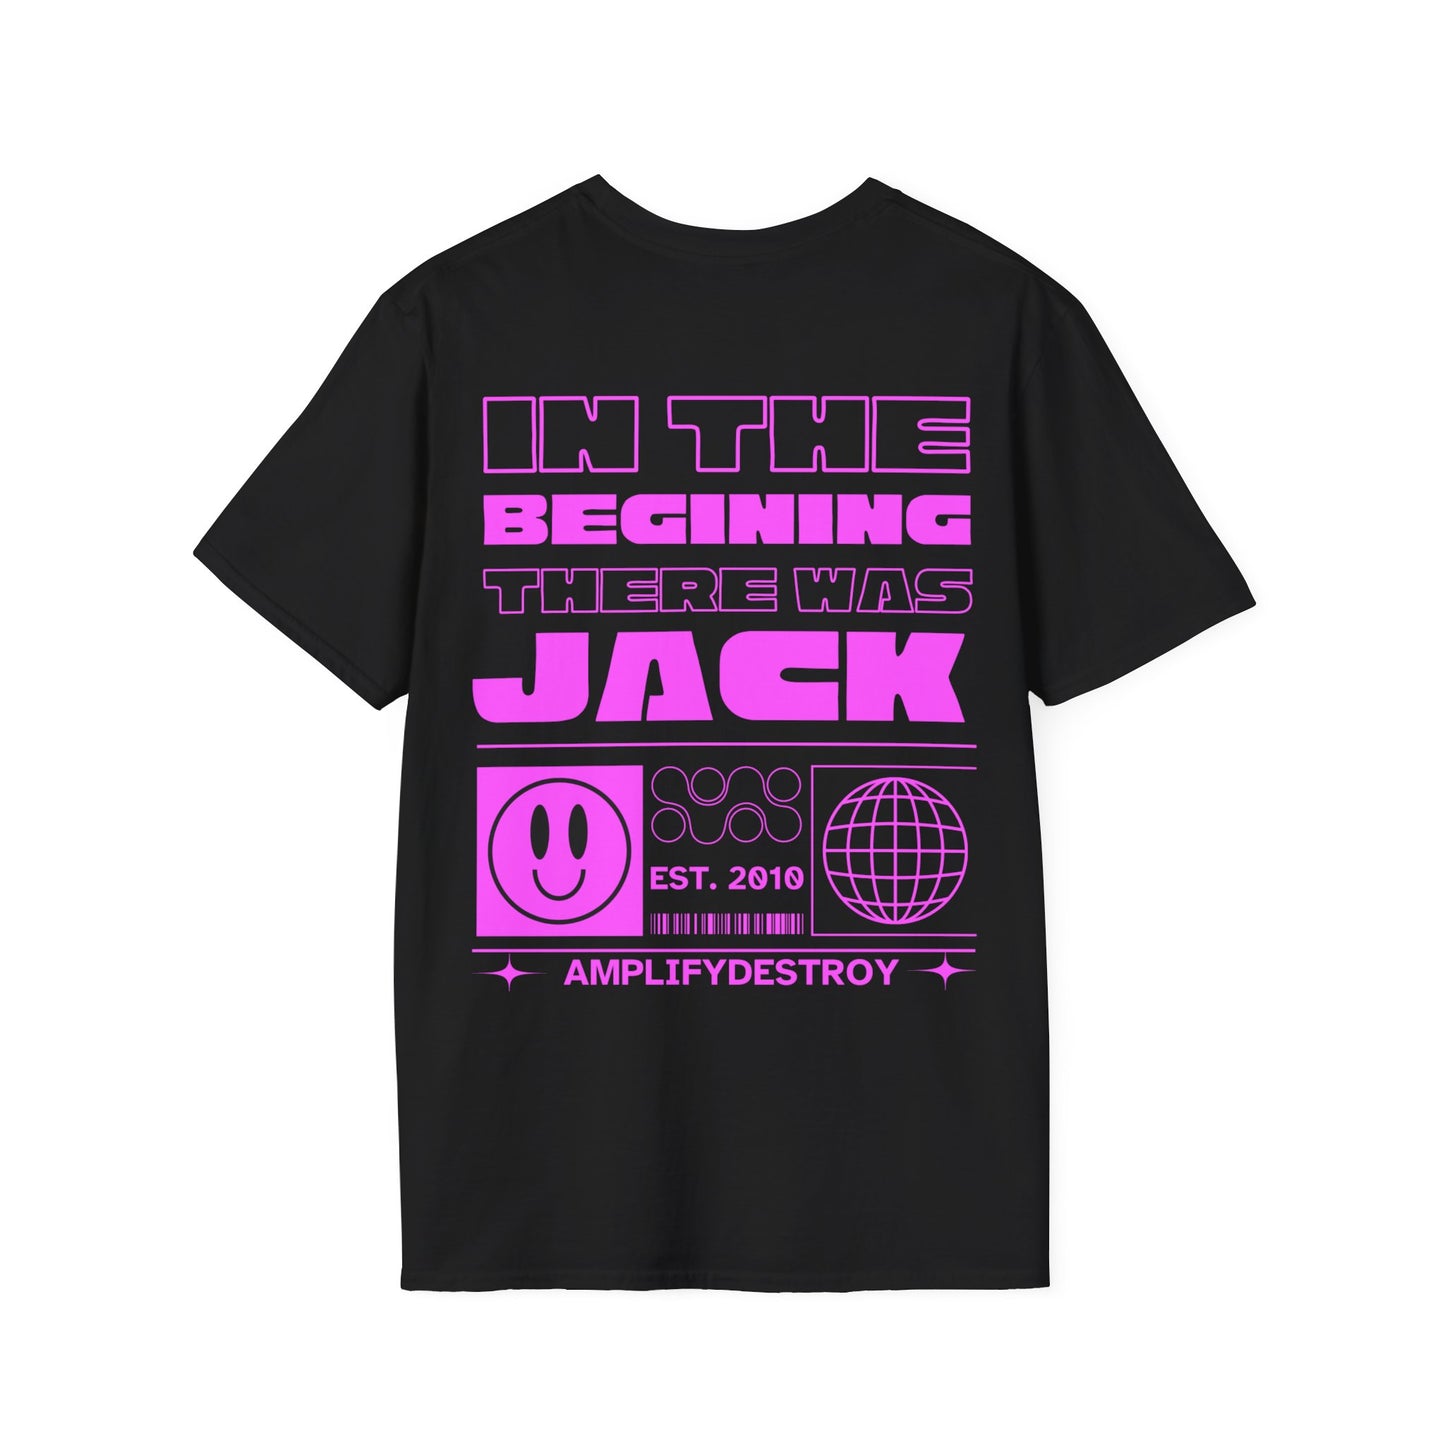 JACK UR BODY Classic Fit AmplifyDestroy Print Tee Shirt Rave House Music 90s Dj Club Flyer